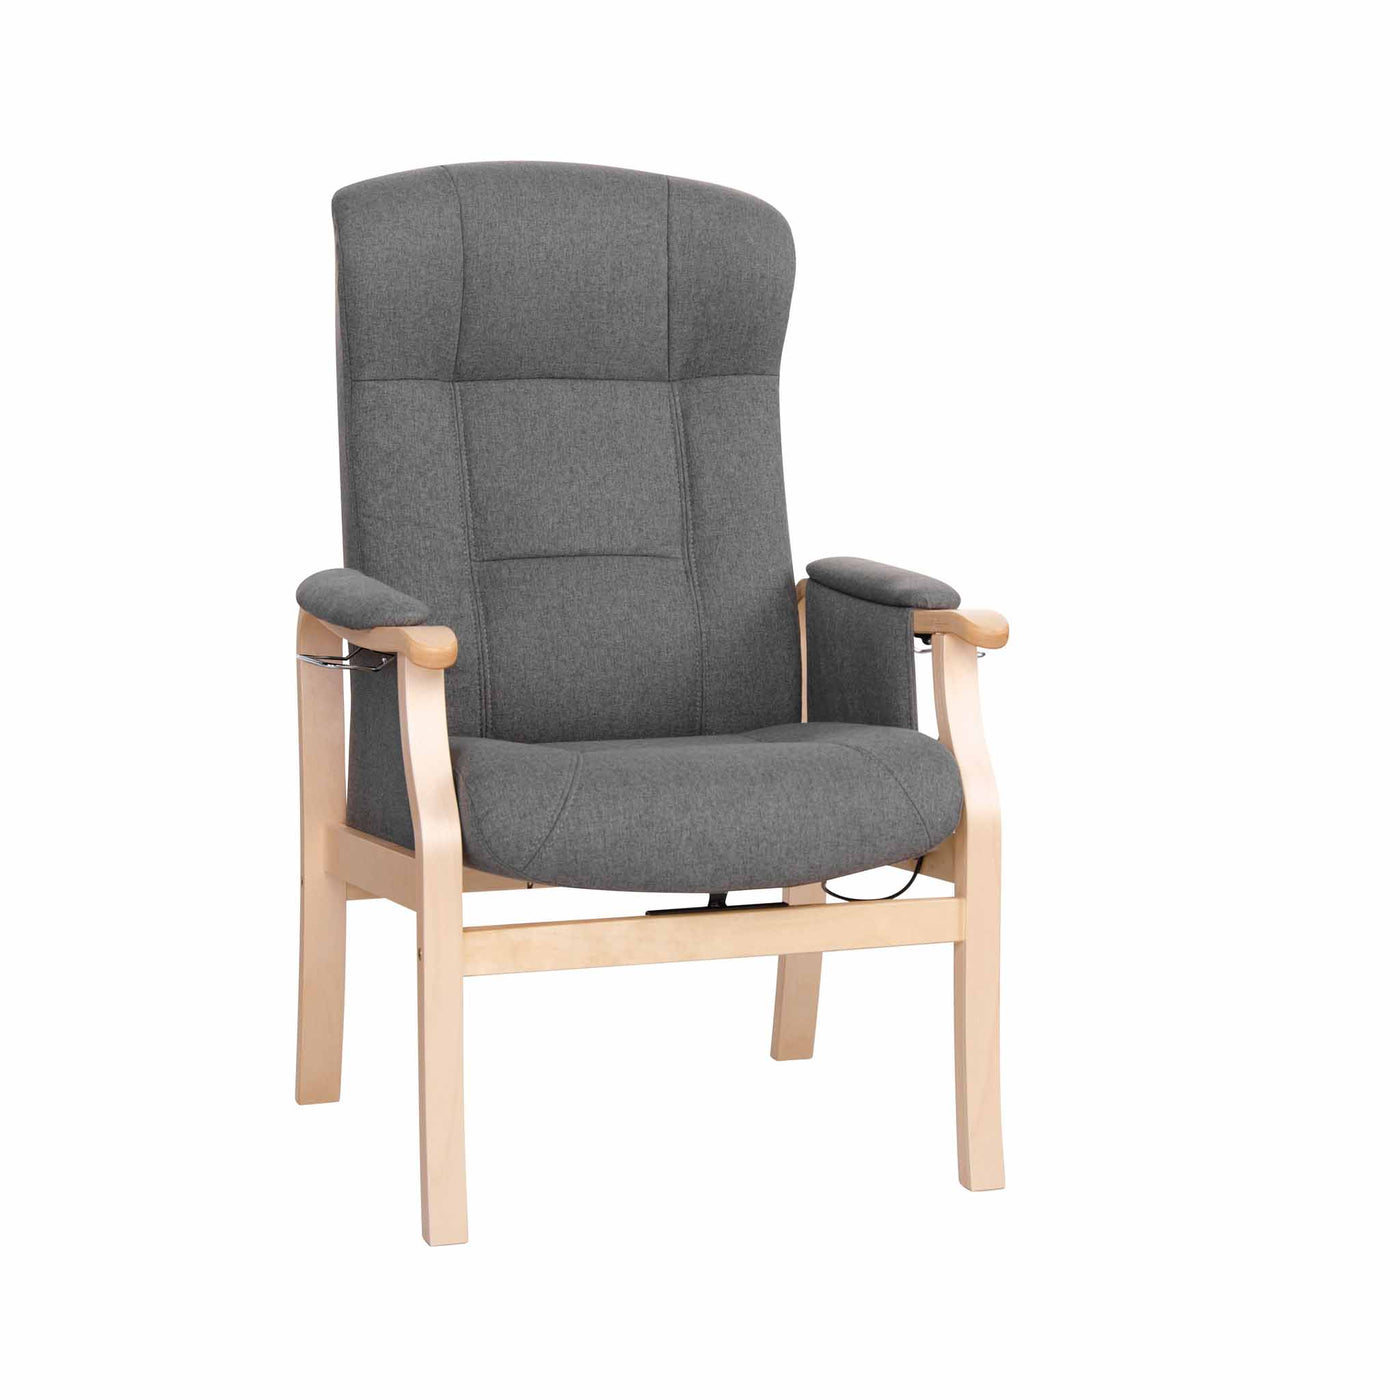 Sorø Plus Otium lænestol i grå stof med ben i naturlakeret eg fra Nordic-C